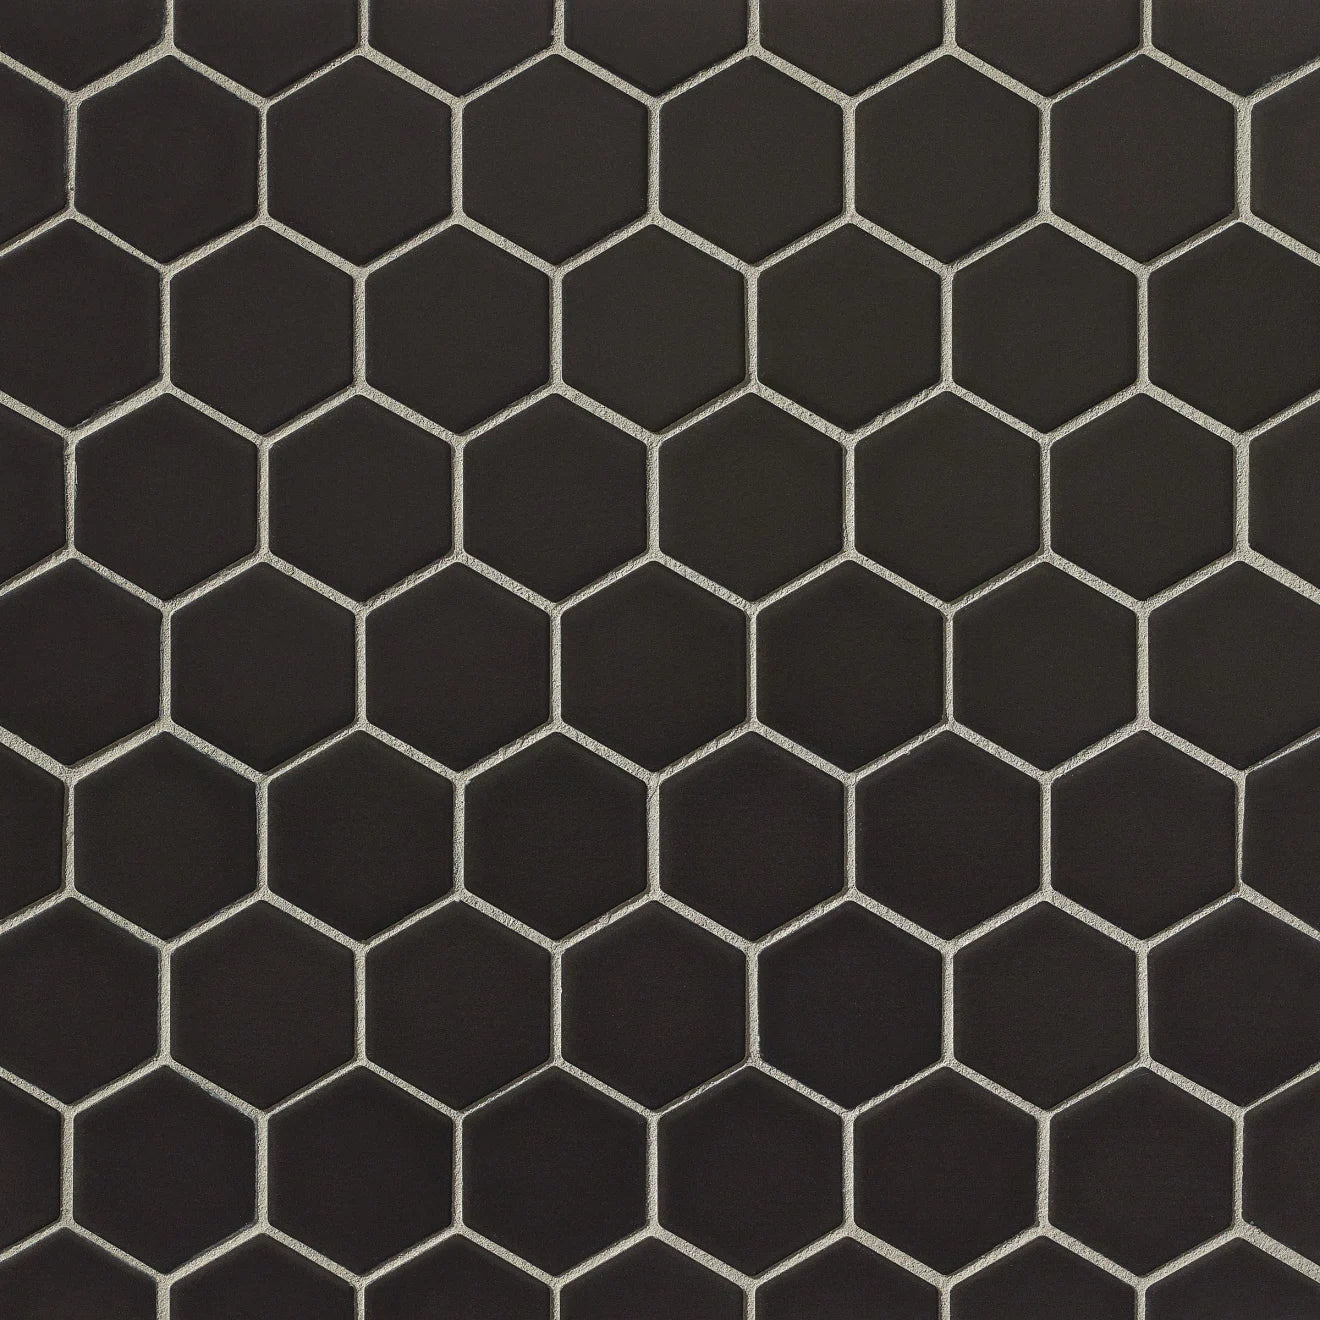 Le Café 2" x 2" Hexagon Mosaic Tile